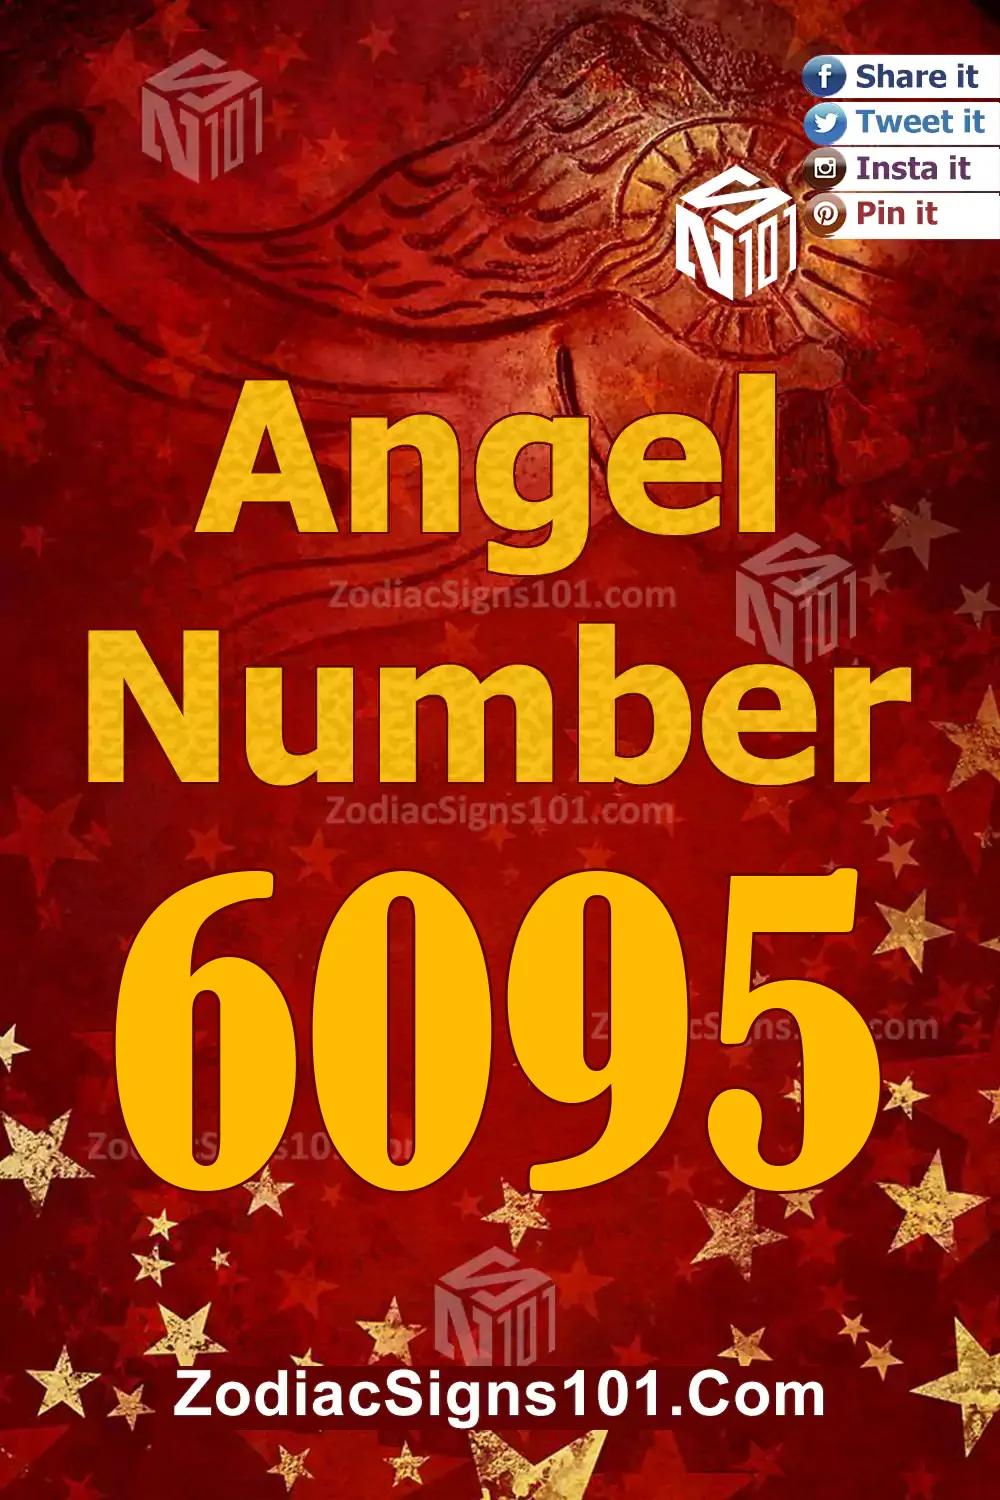 6095-Angel-Number-Meaning.jpg